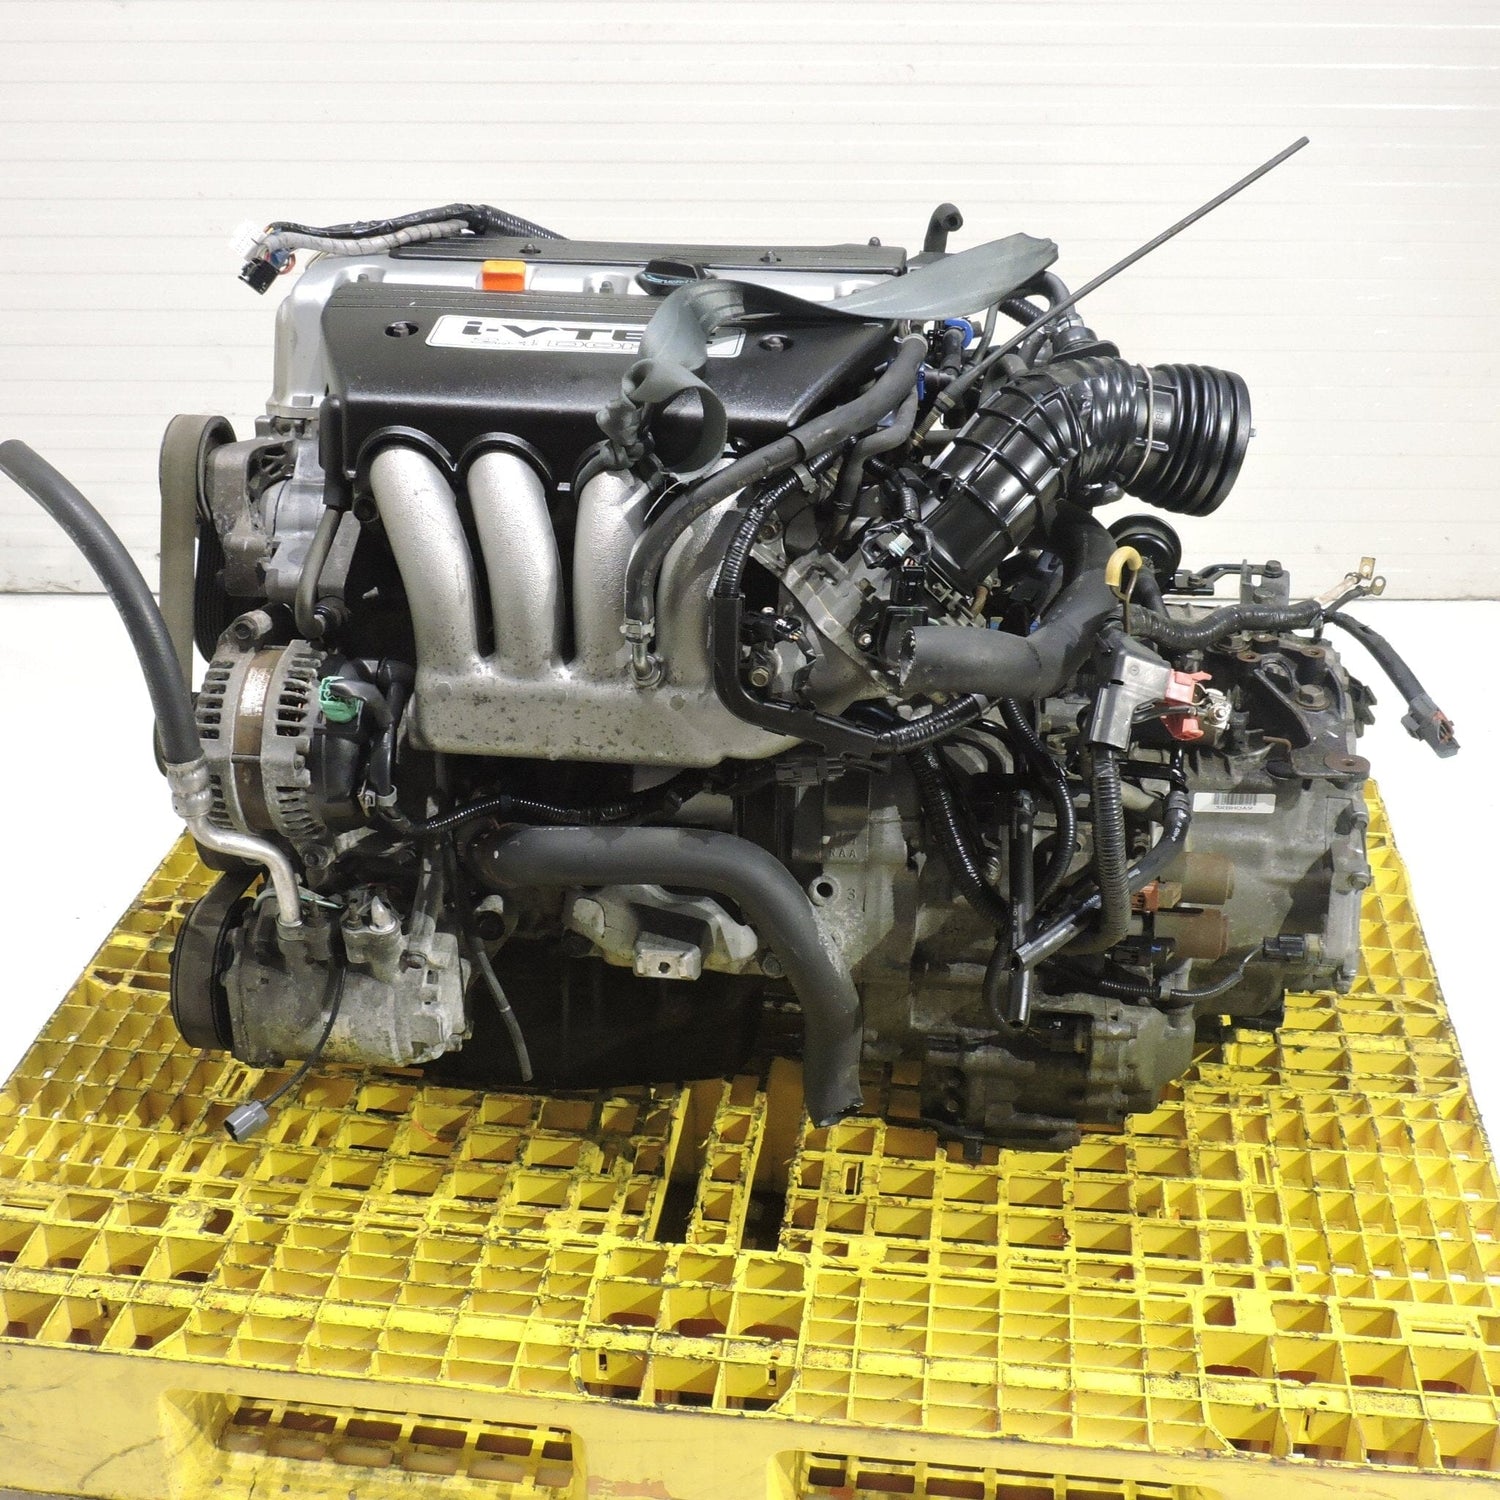 Honda Element 2003-2007 2.4L Dohc I-Vtec JDM Engine Only - K24a - Replaces K24a4